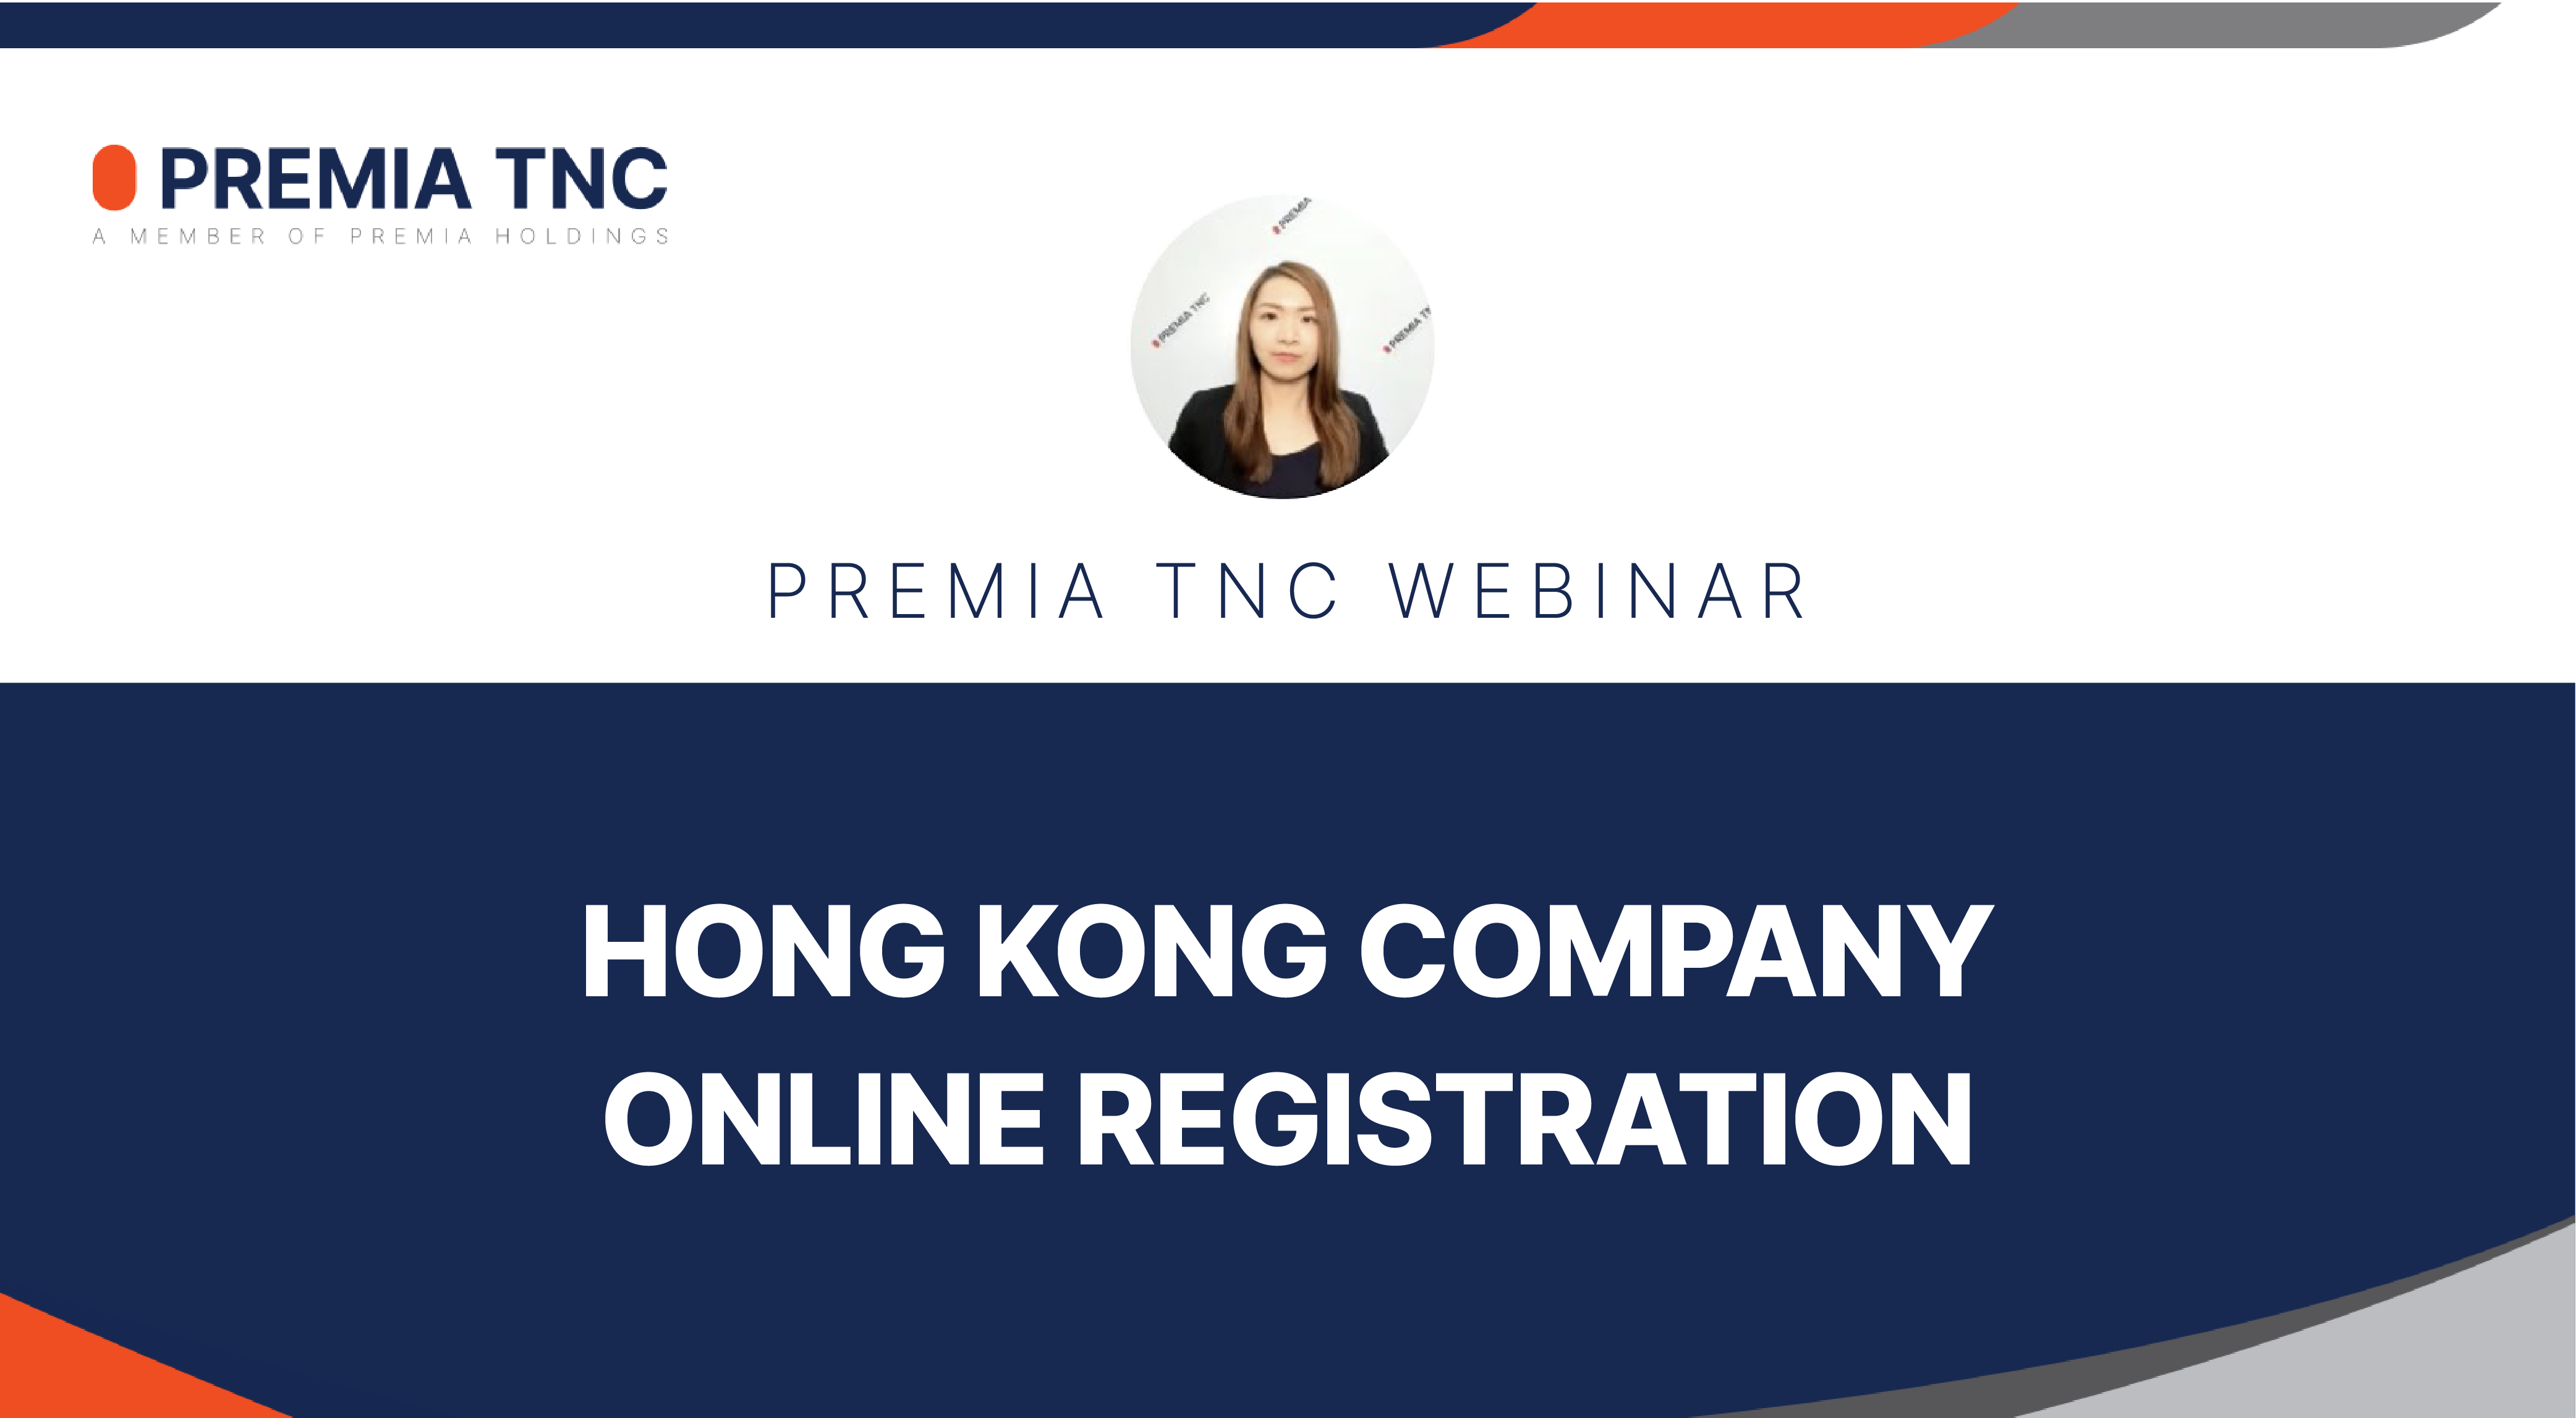 Company Online Registration